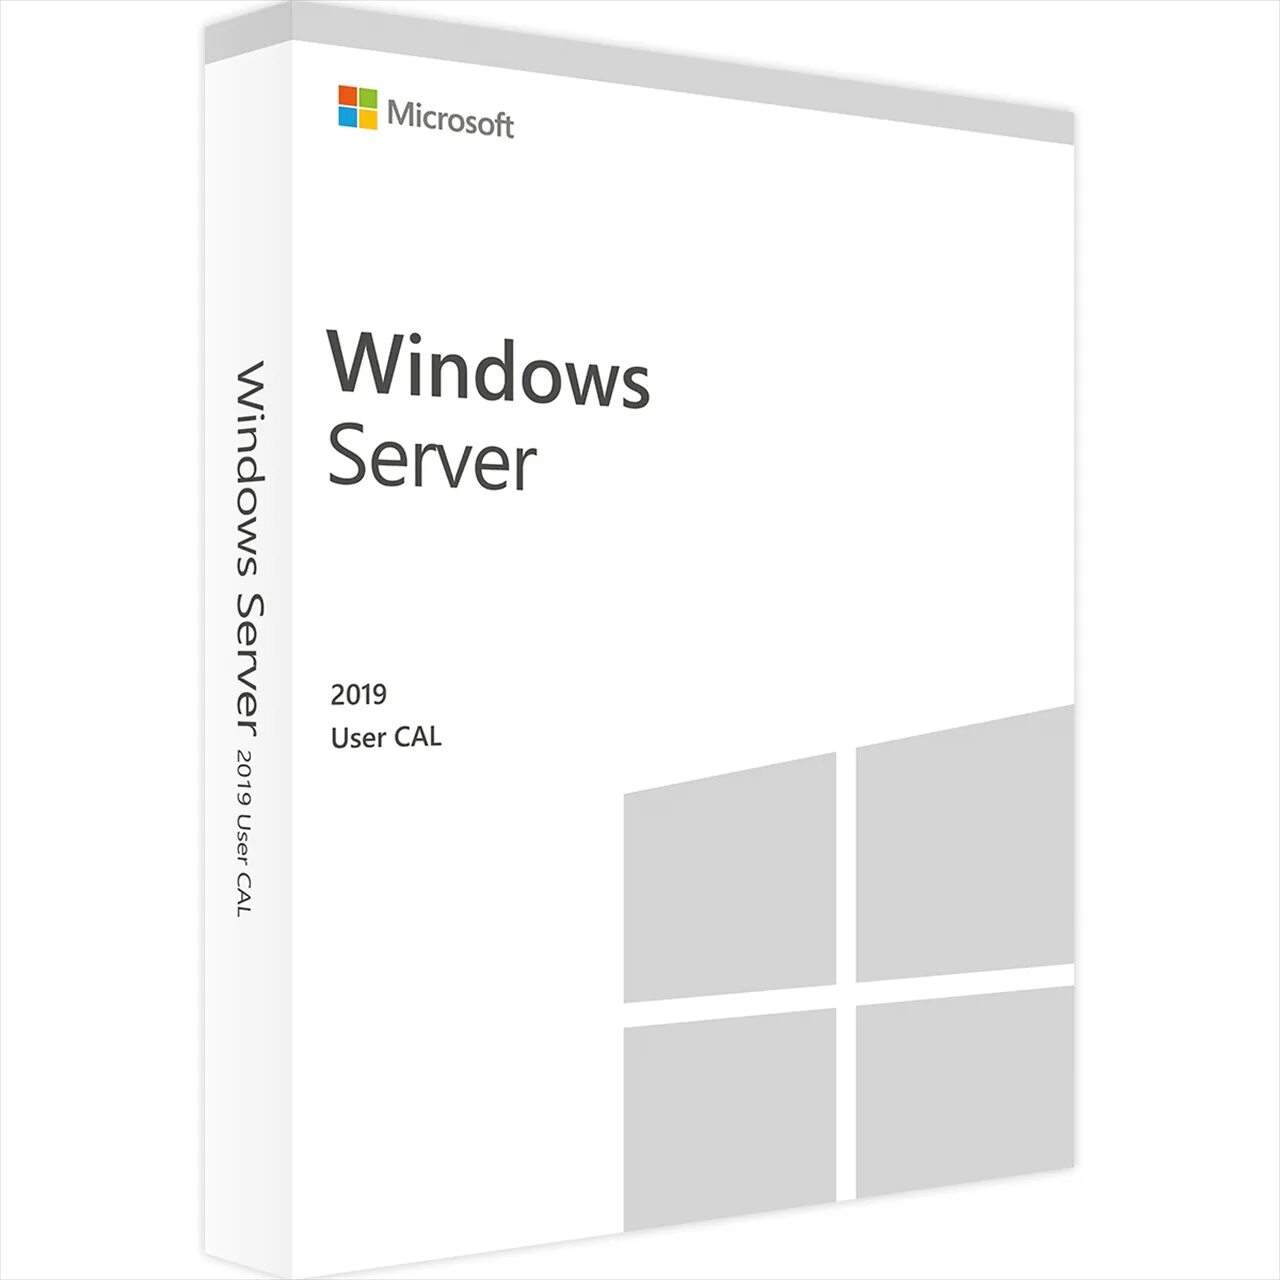 Microsoft Windows Server cal 2019. Windows Server STD 2019. Windows Server 2019 user cal. Windows Server 2019 device cal.